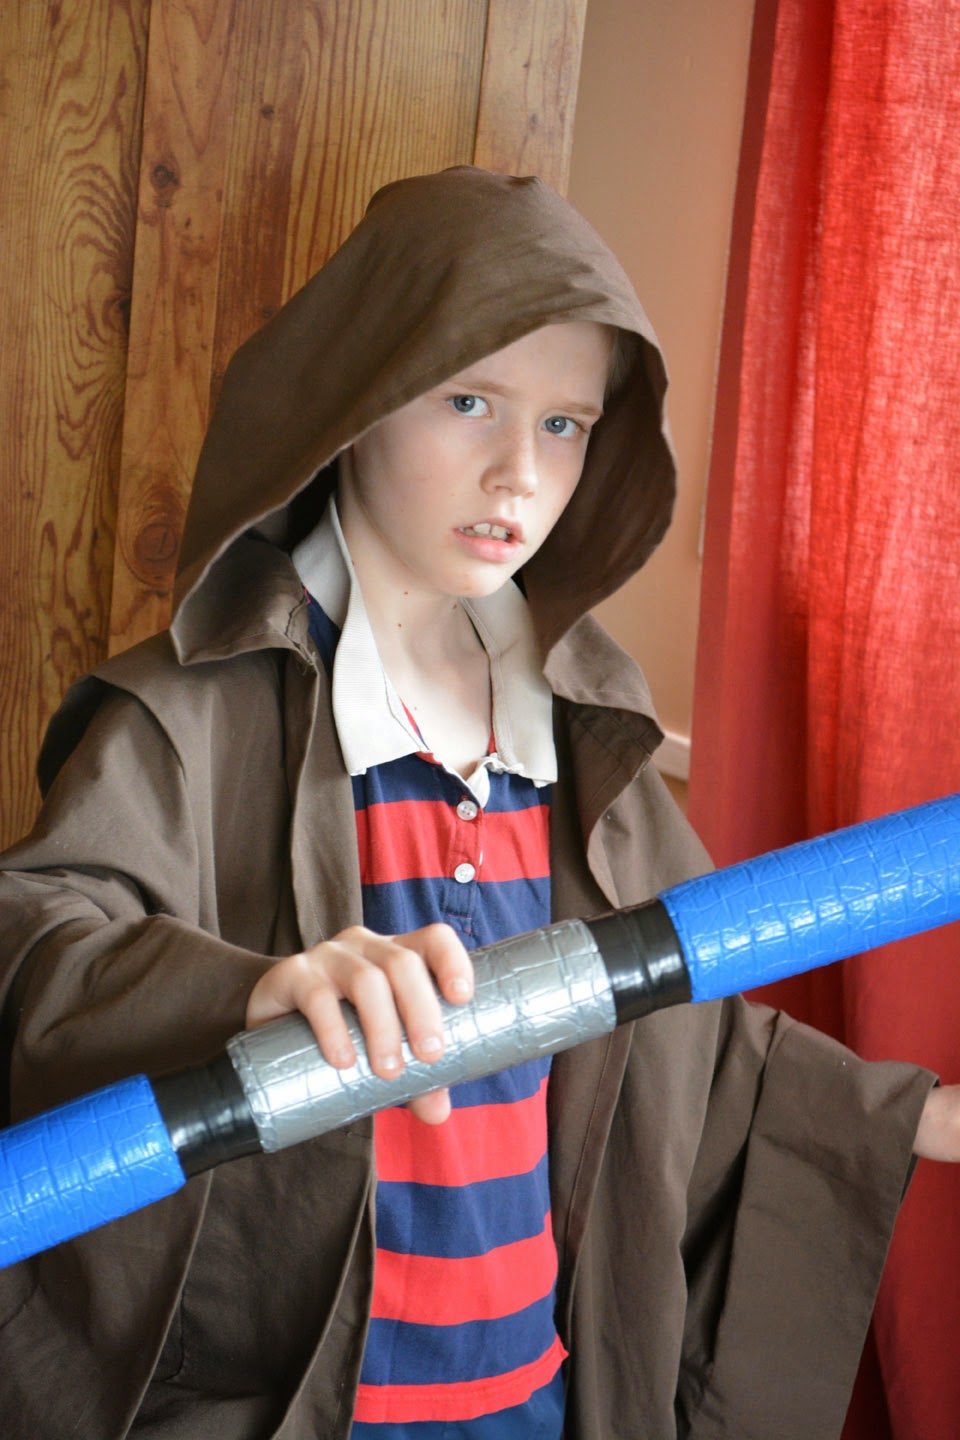 Jedi boy with light sabre